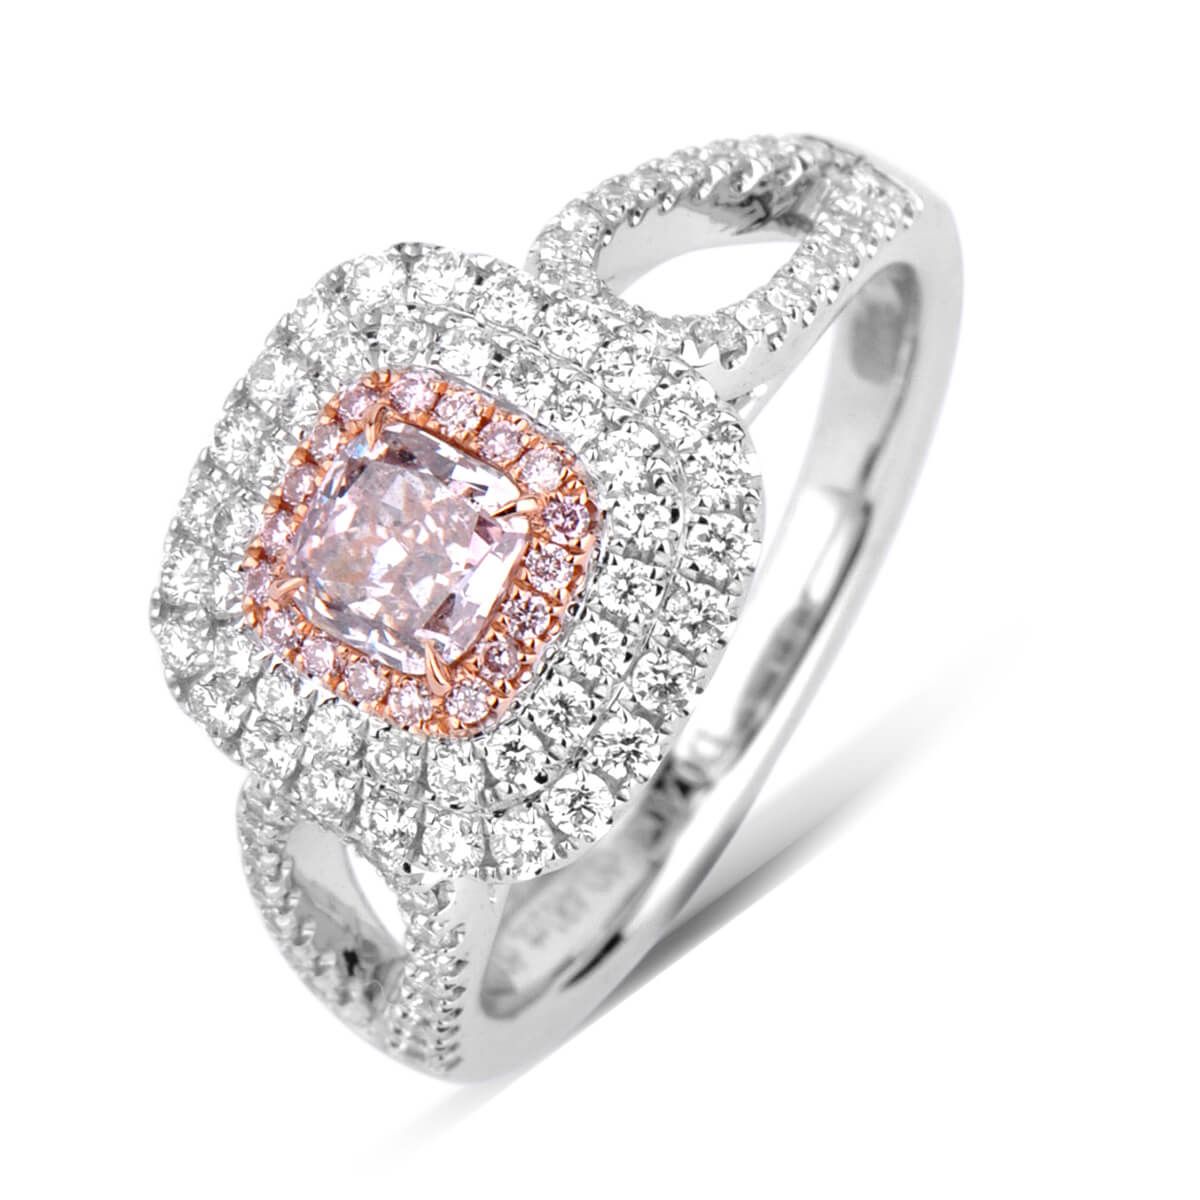 Fancy Brownish Pink Diamond Ring, 0.28 Ct. (0.85 Ct. TW), Cushion shape, GIA Certified, 6183417531